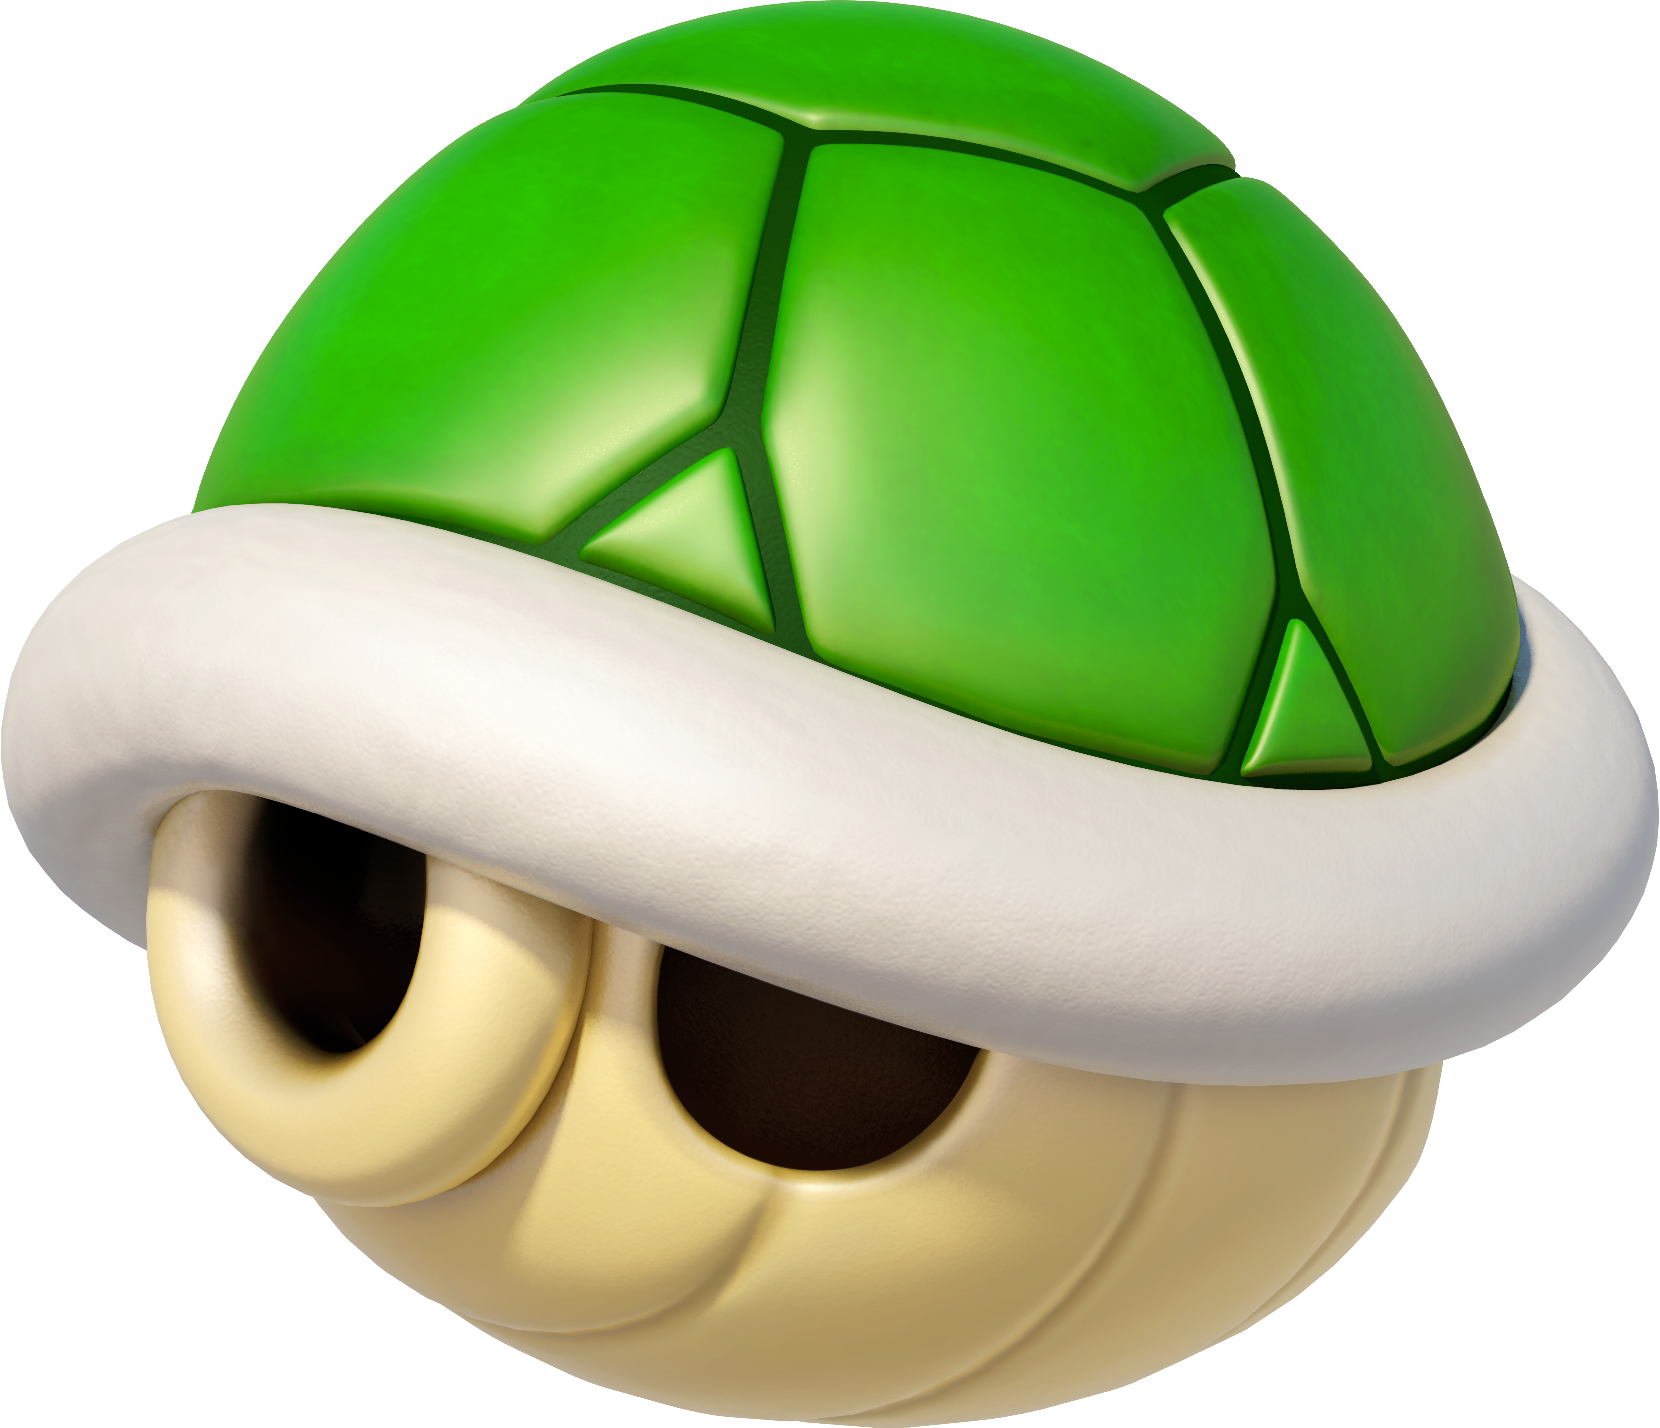 Super Mario 64 Koopa Shell